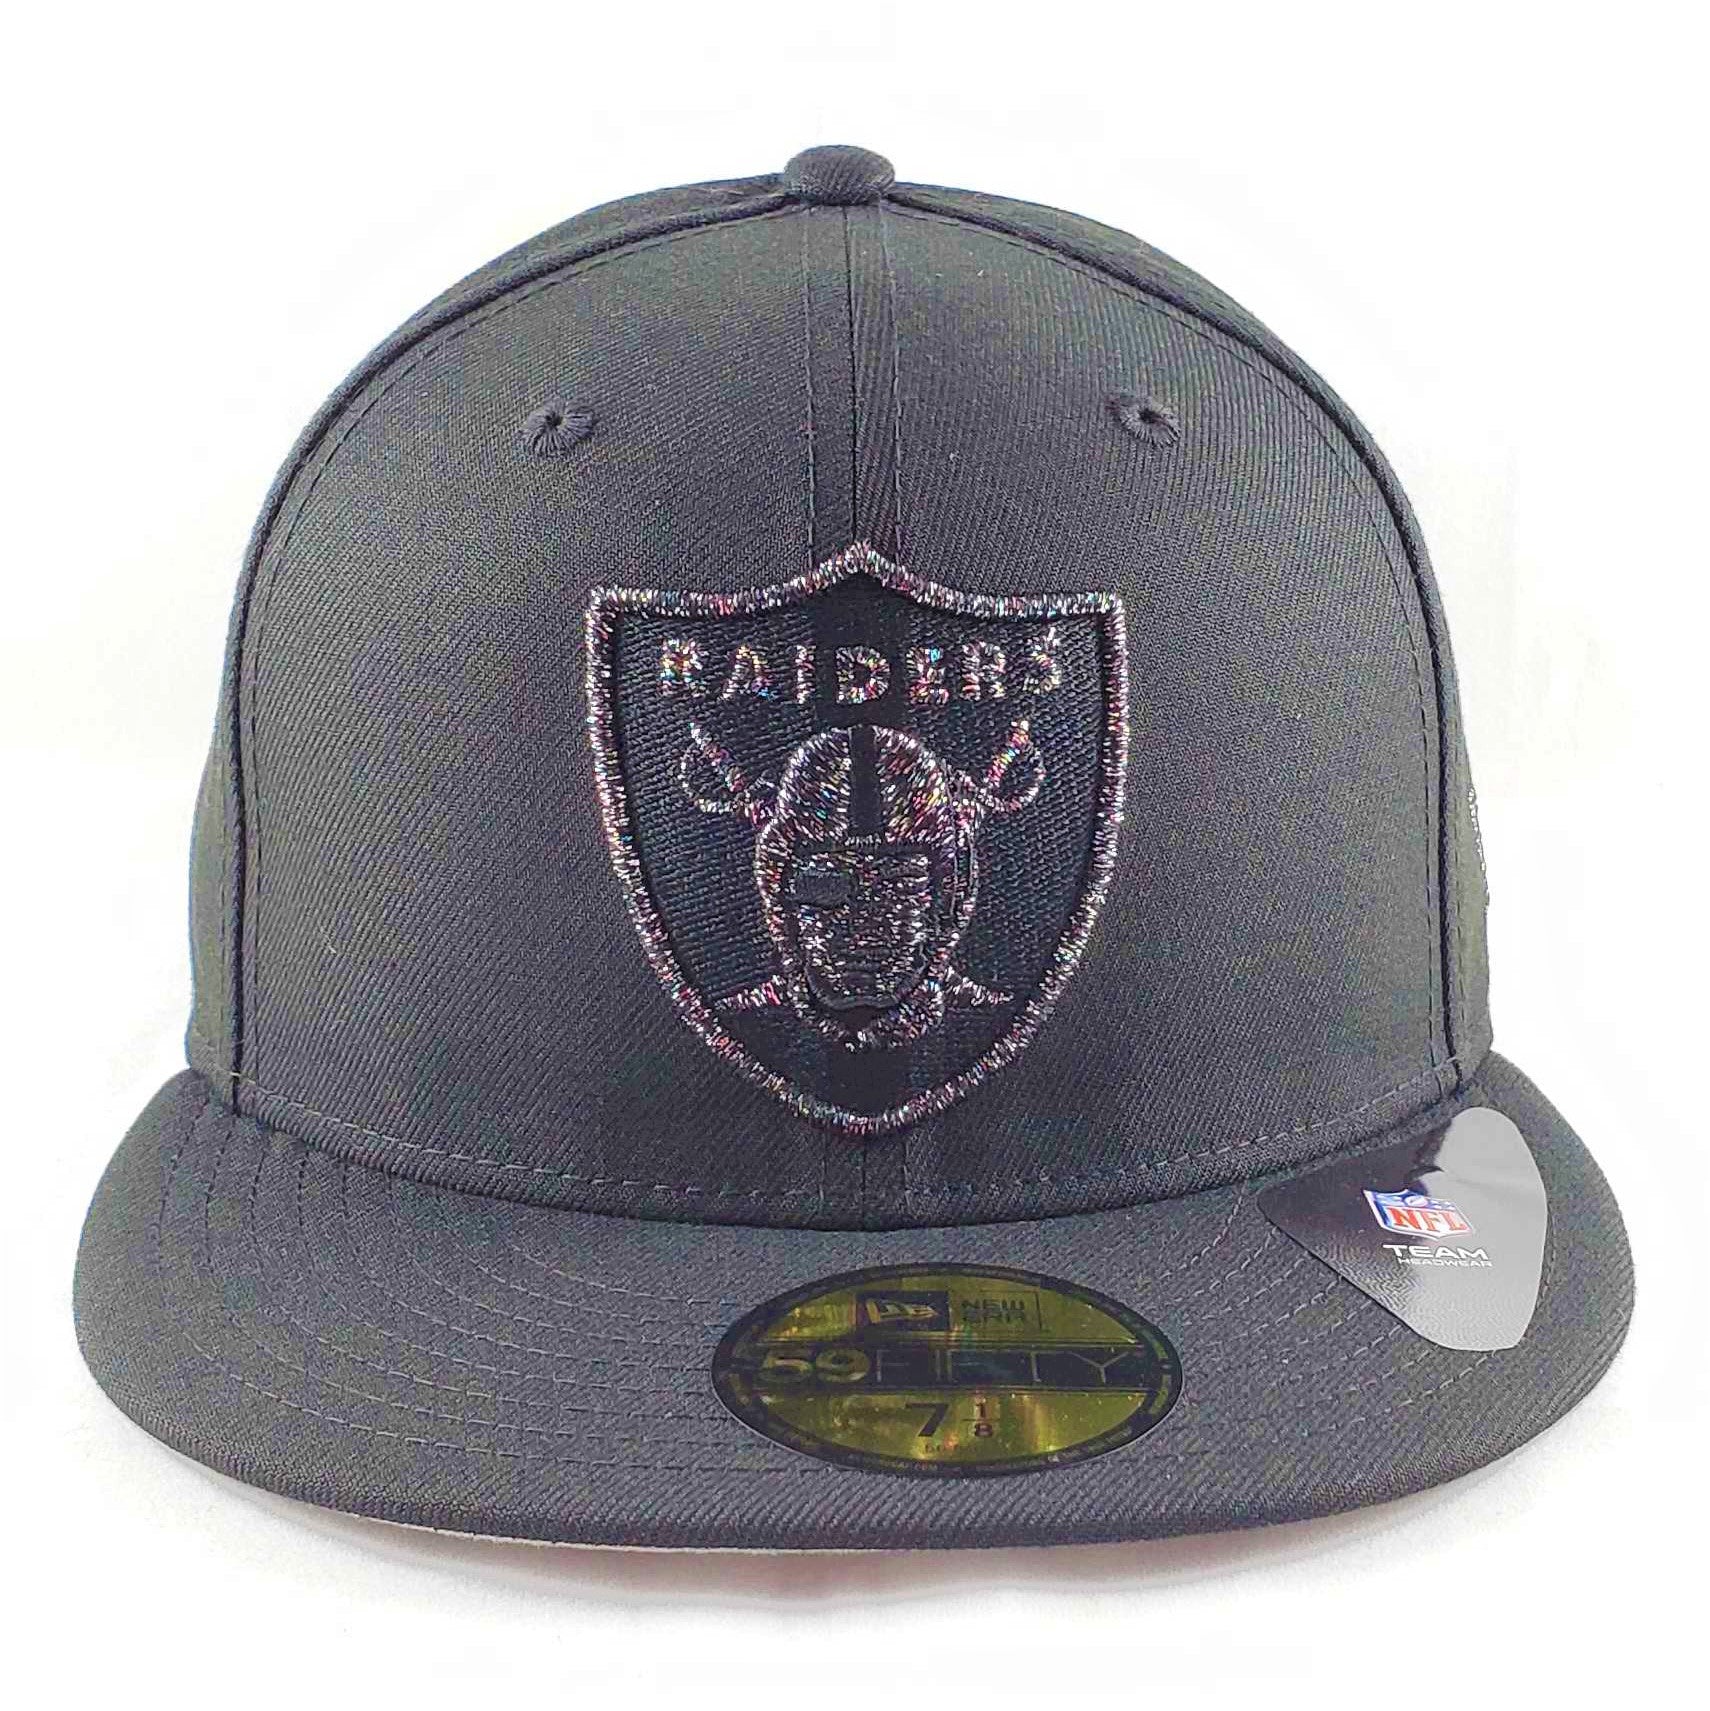 Las Vegas Raiders New Era Bandana 59FIFTY Fitted Hat - Black